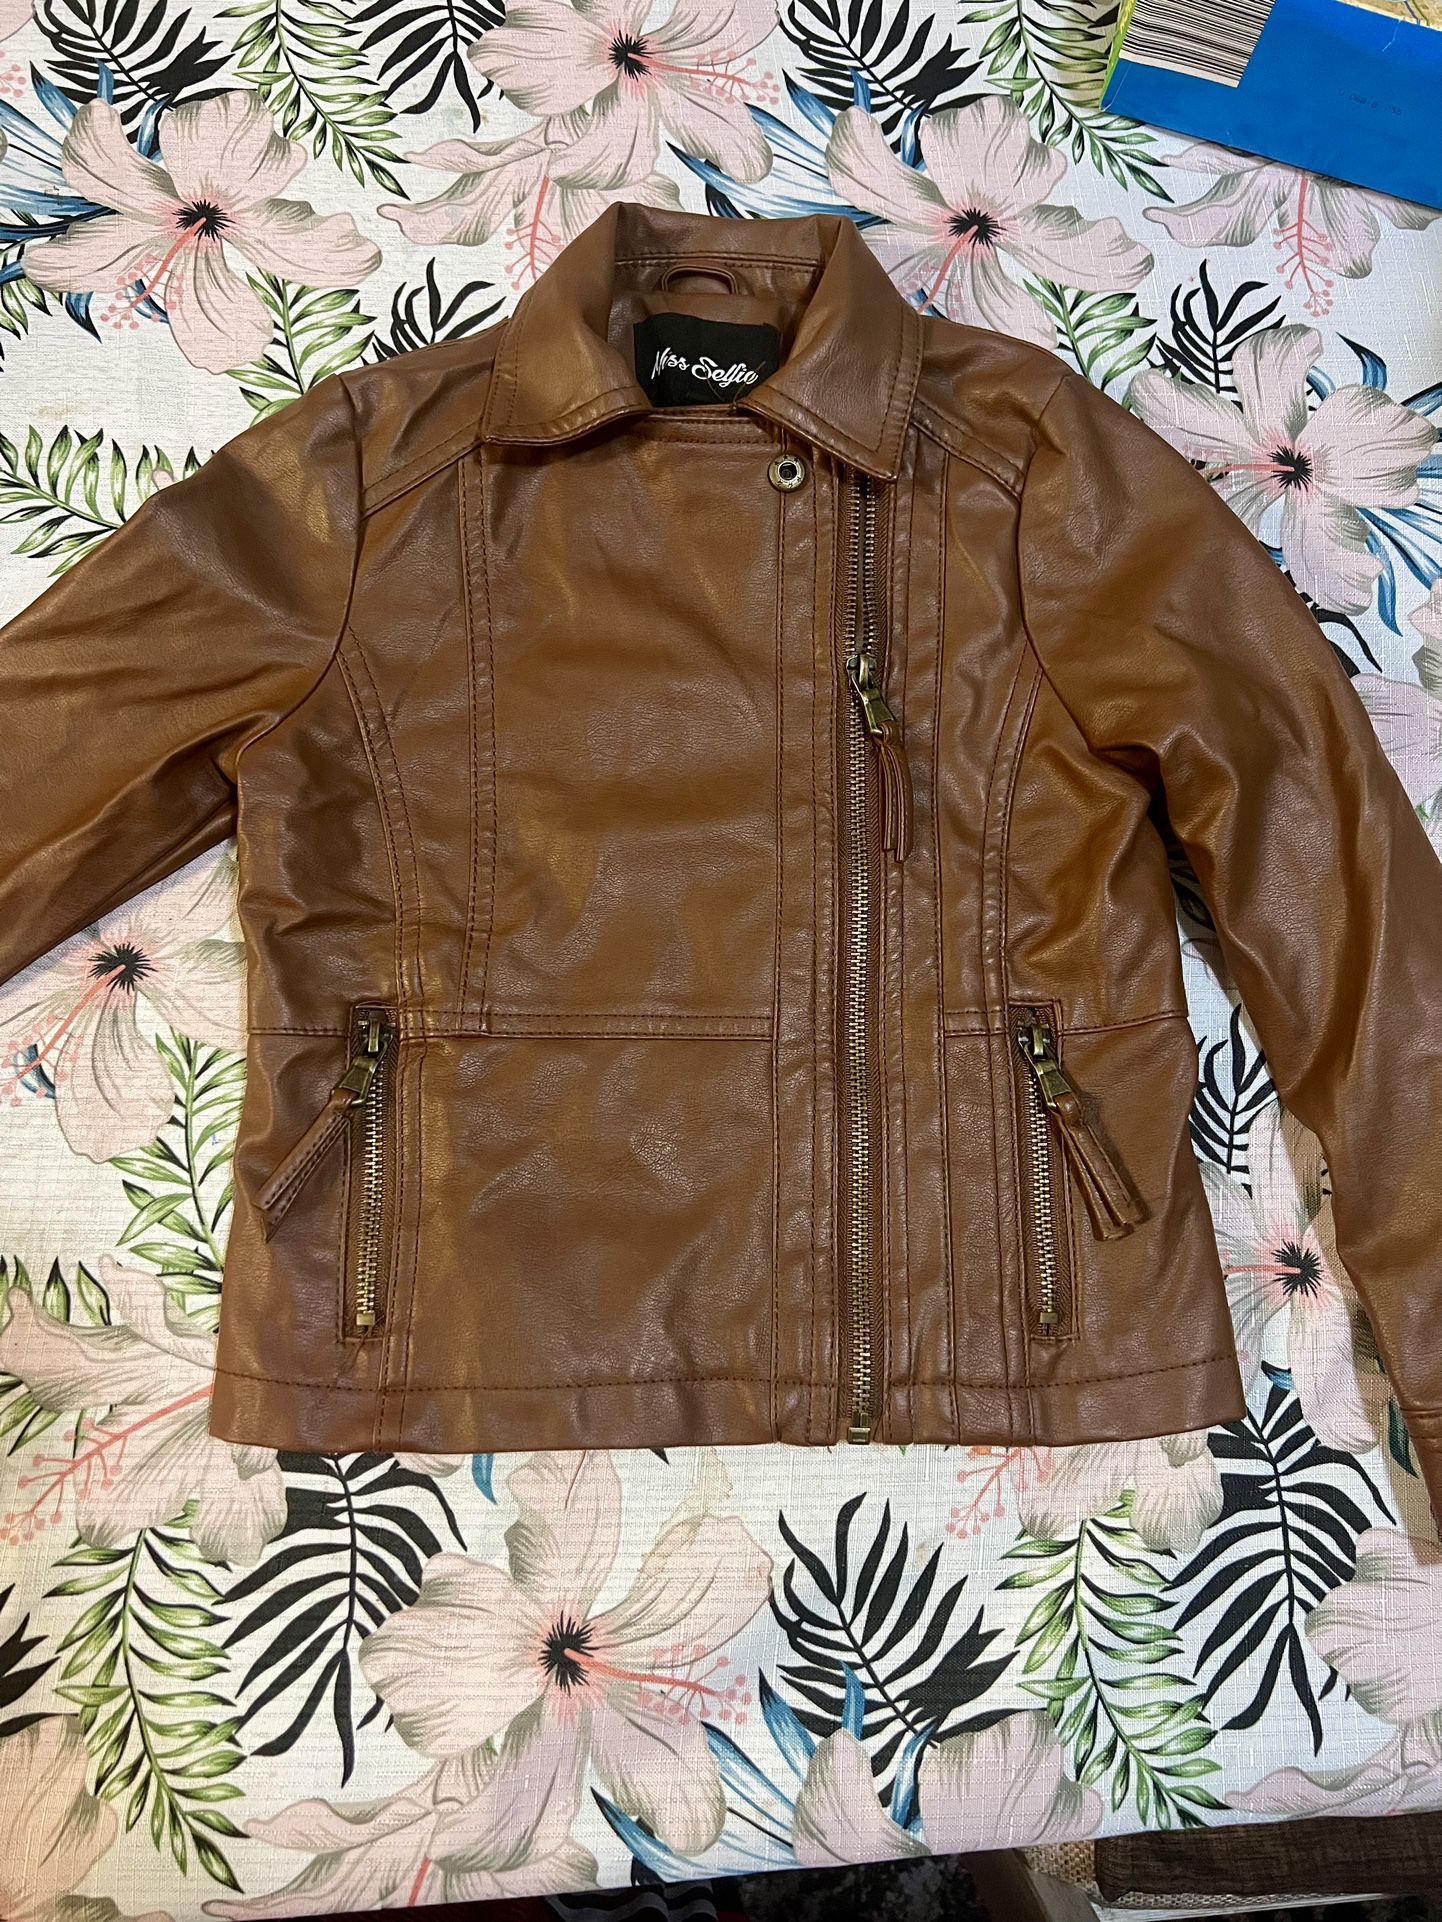 New Leather Kids Jacket Size 4-5 